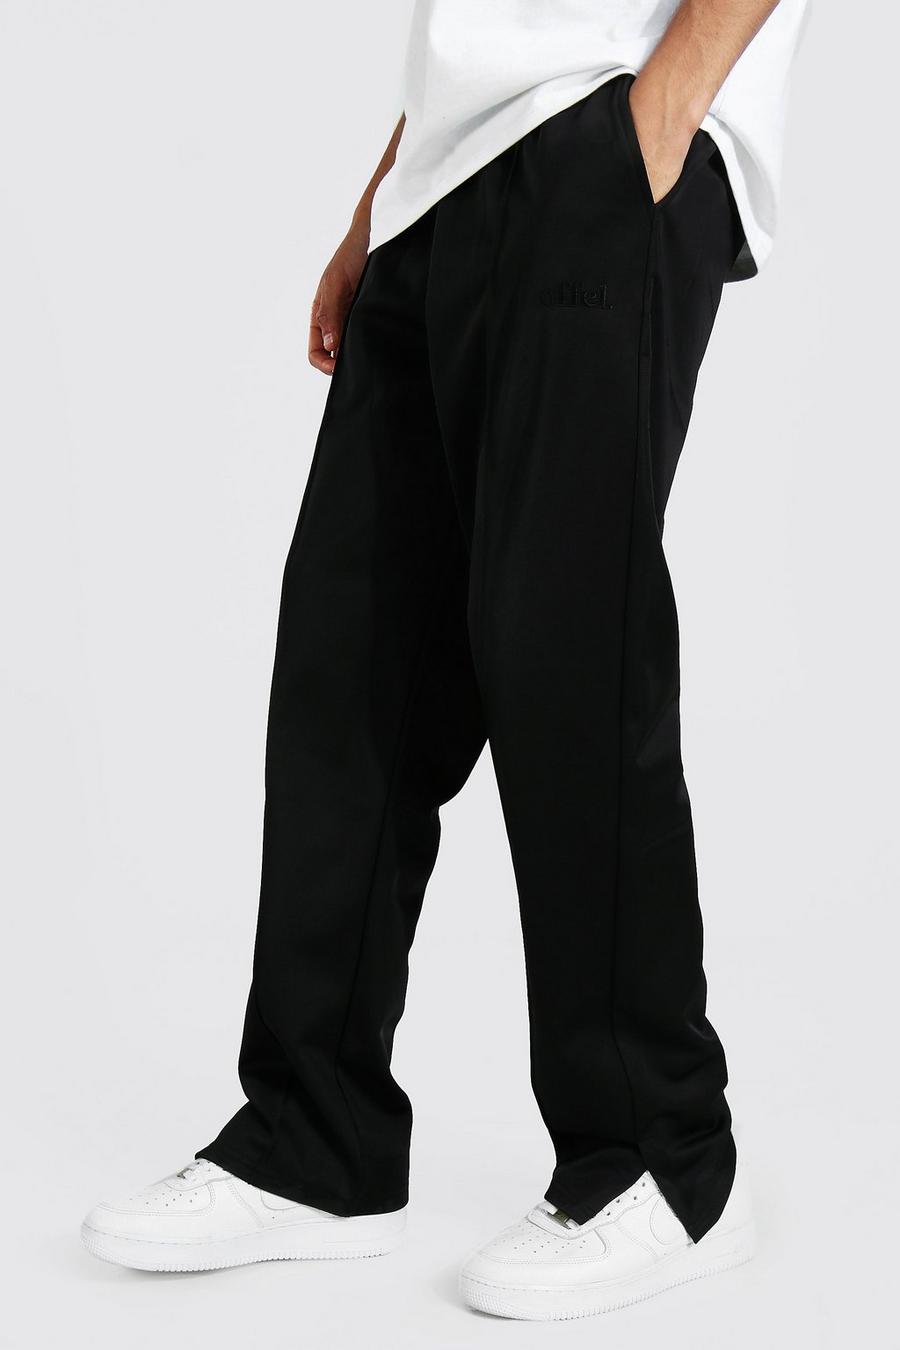 Pantalón deportivo Tall de tejido por urdimbre holgados con alforza, Black negro